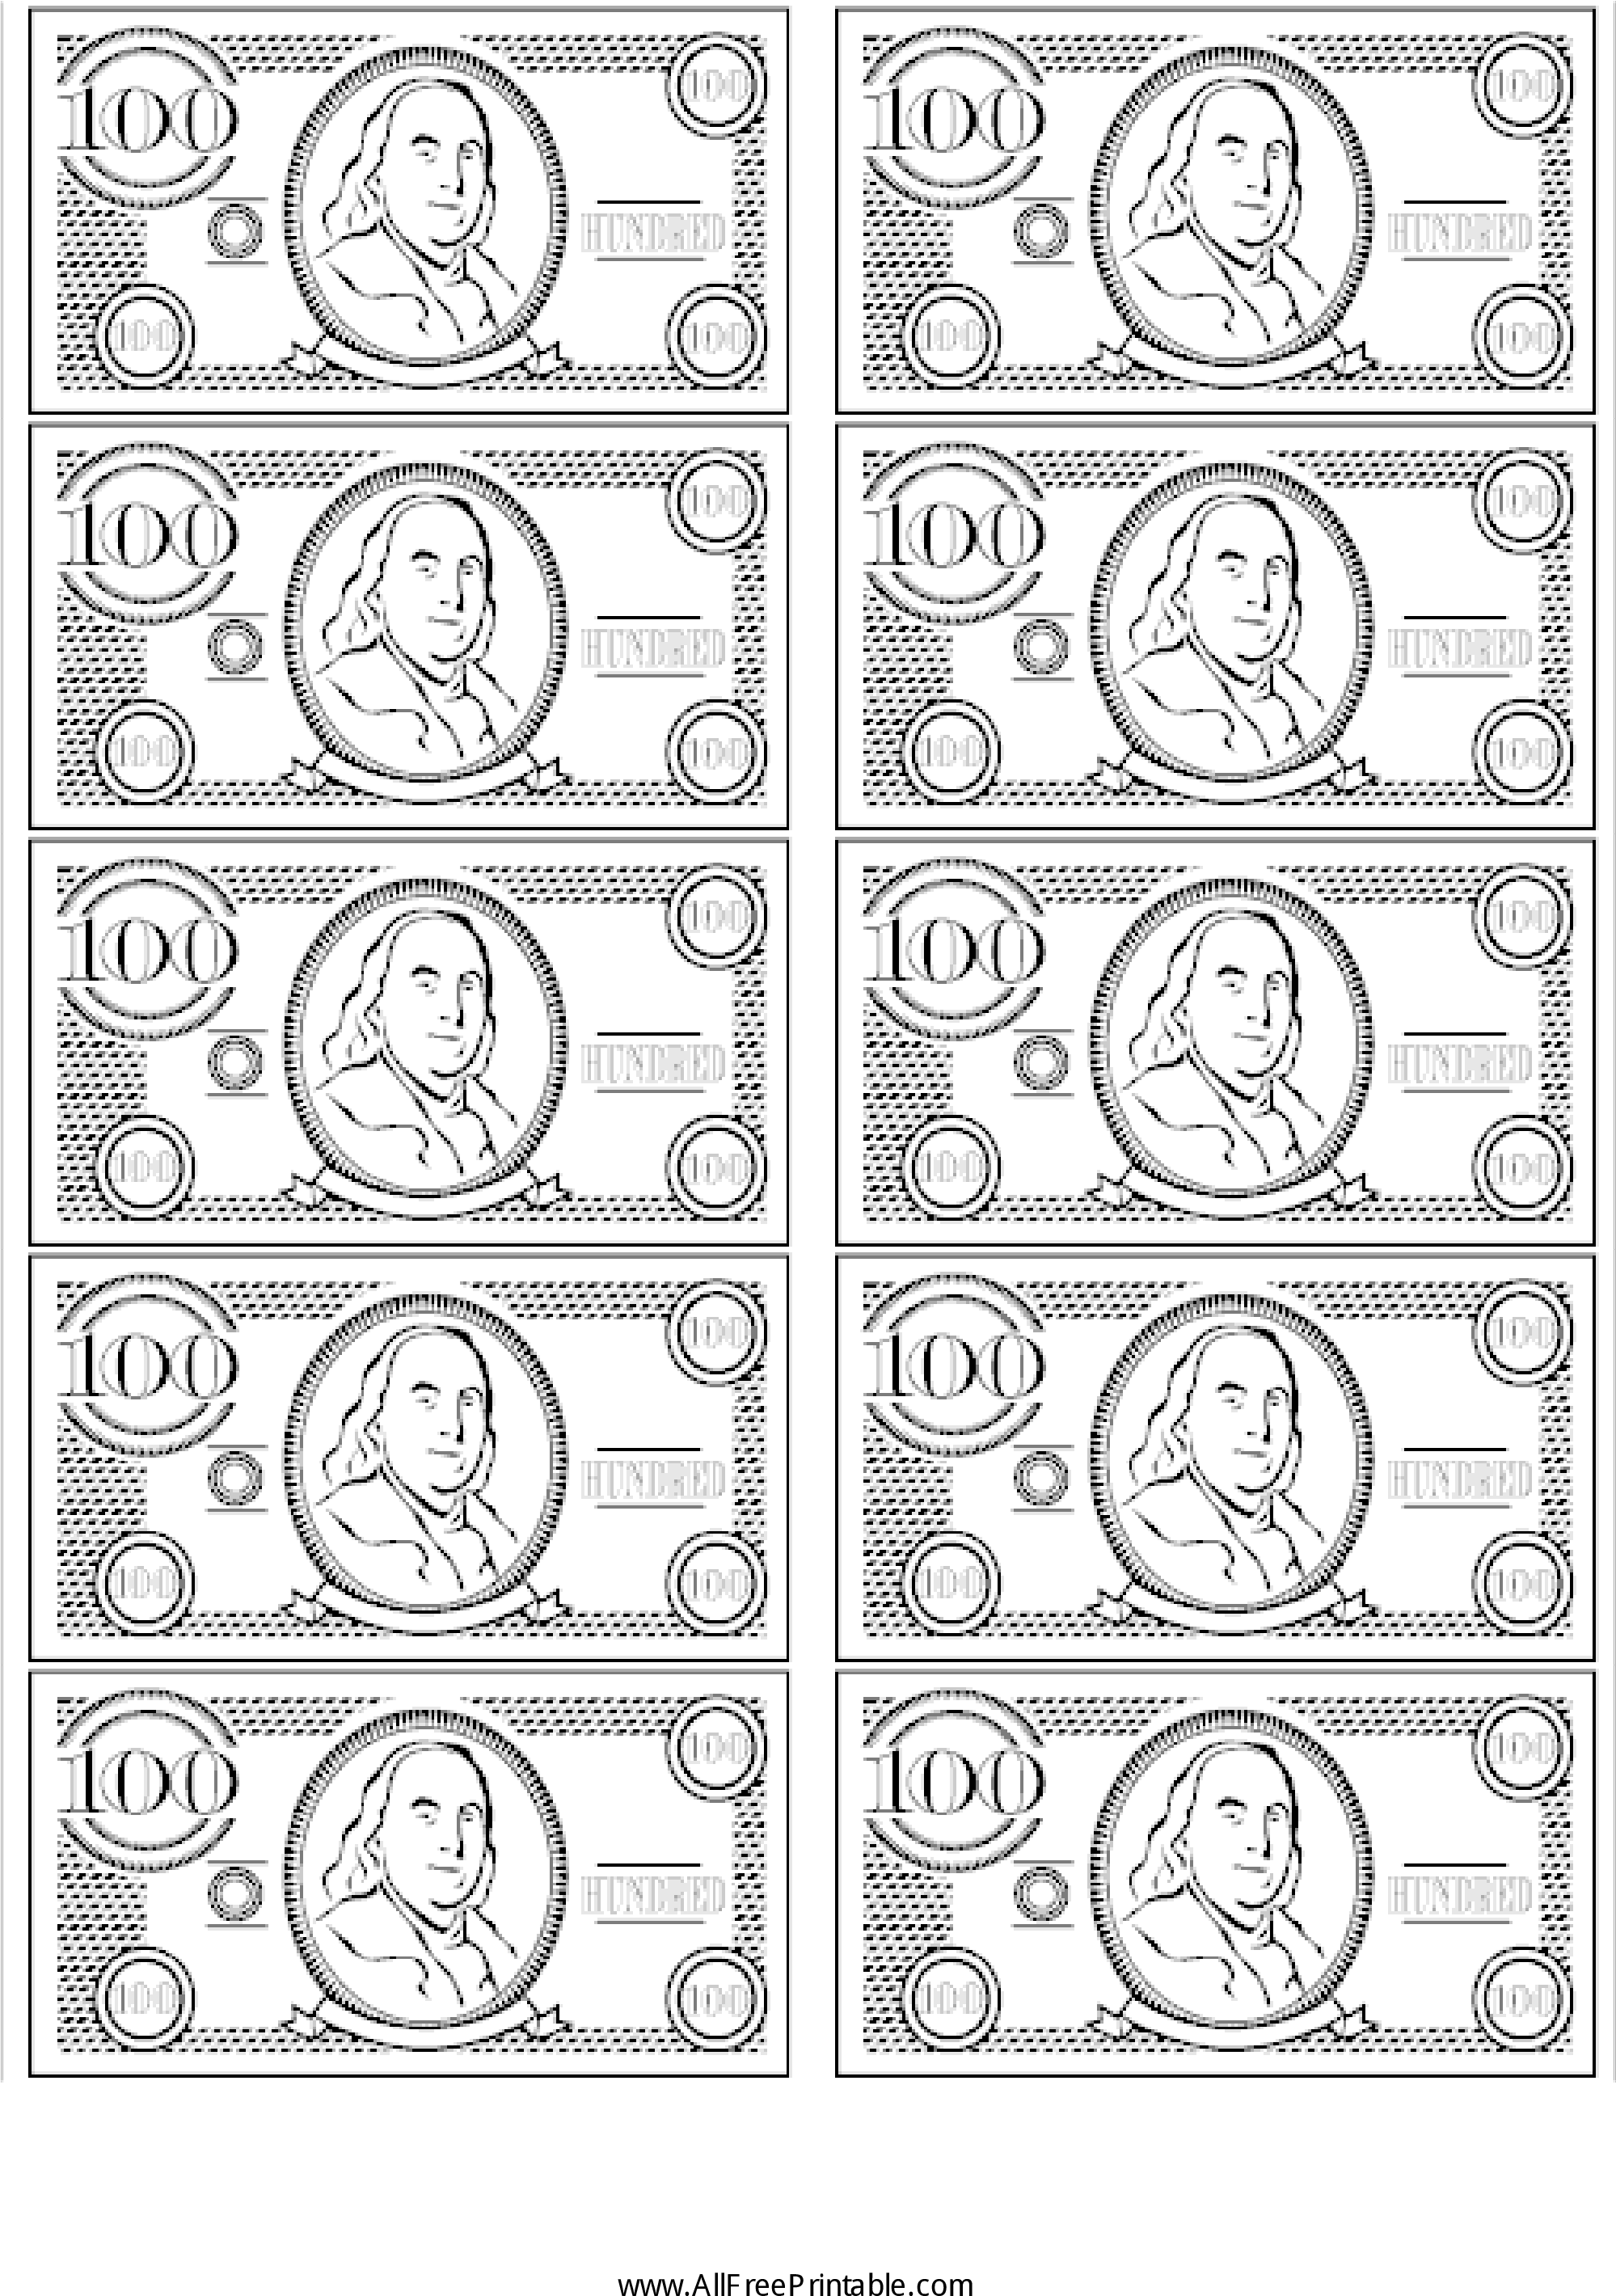 100-bill-fake-money-main-image-printable-play-money-black-and-white